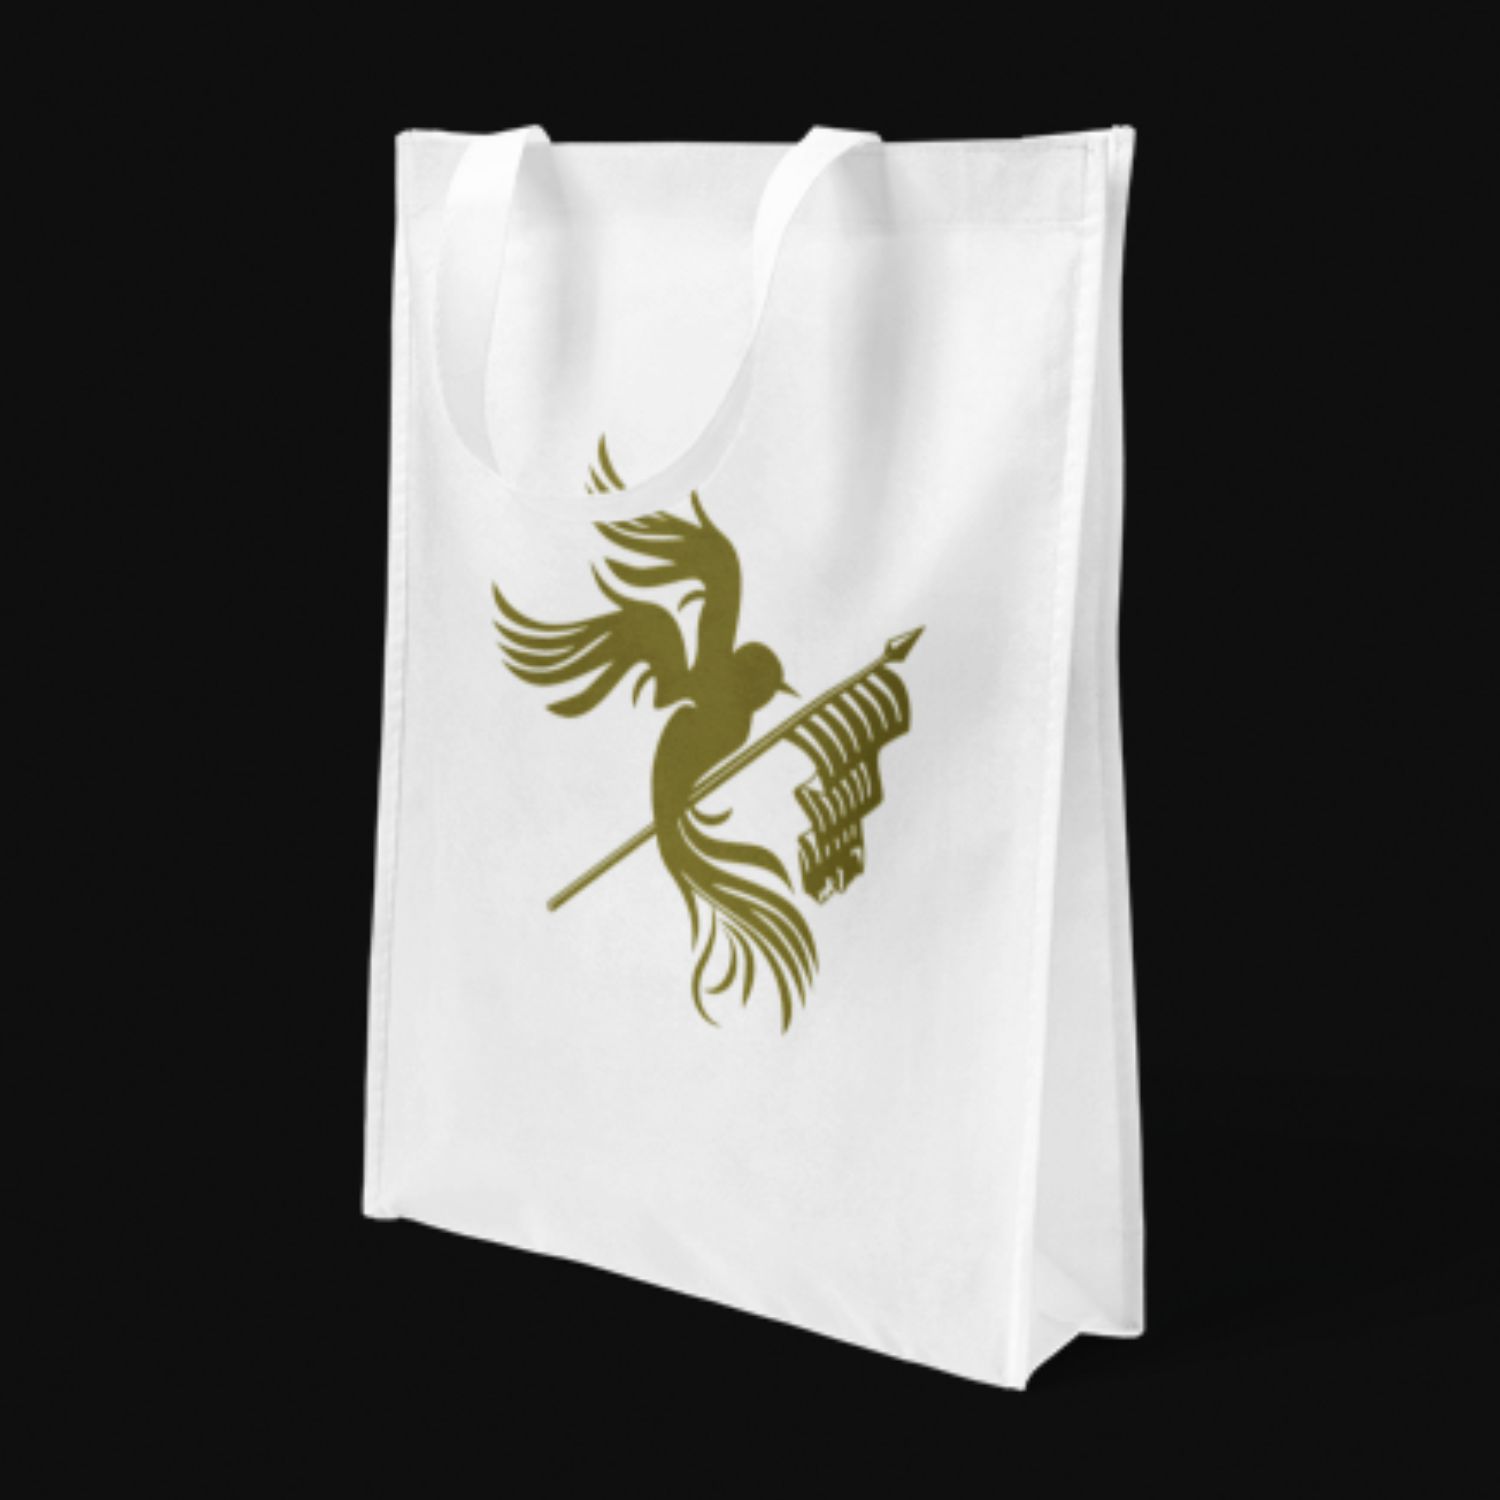 Birds Bearing Flag Logo